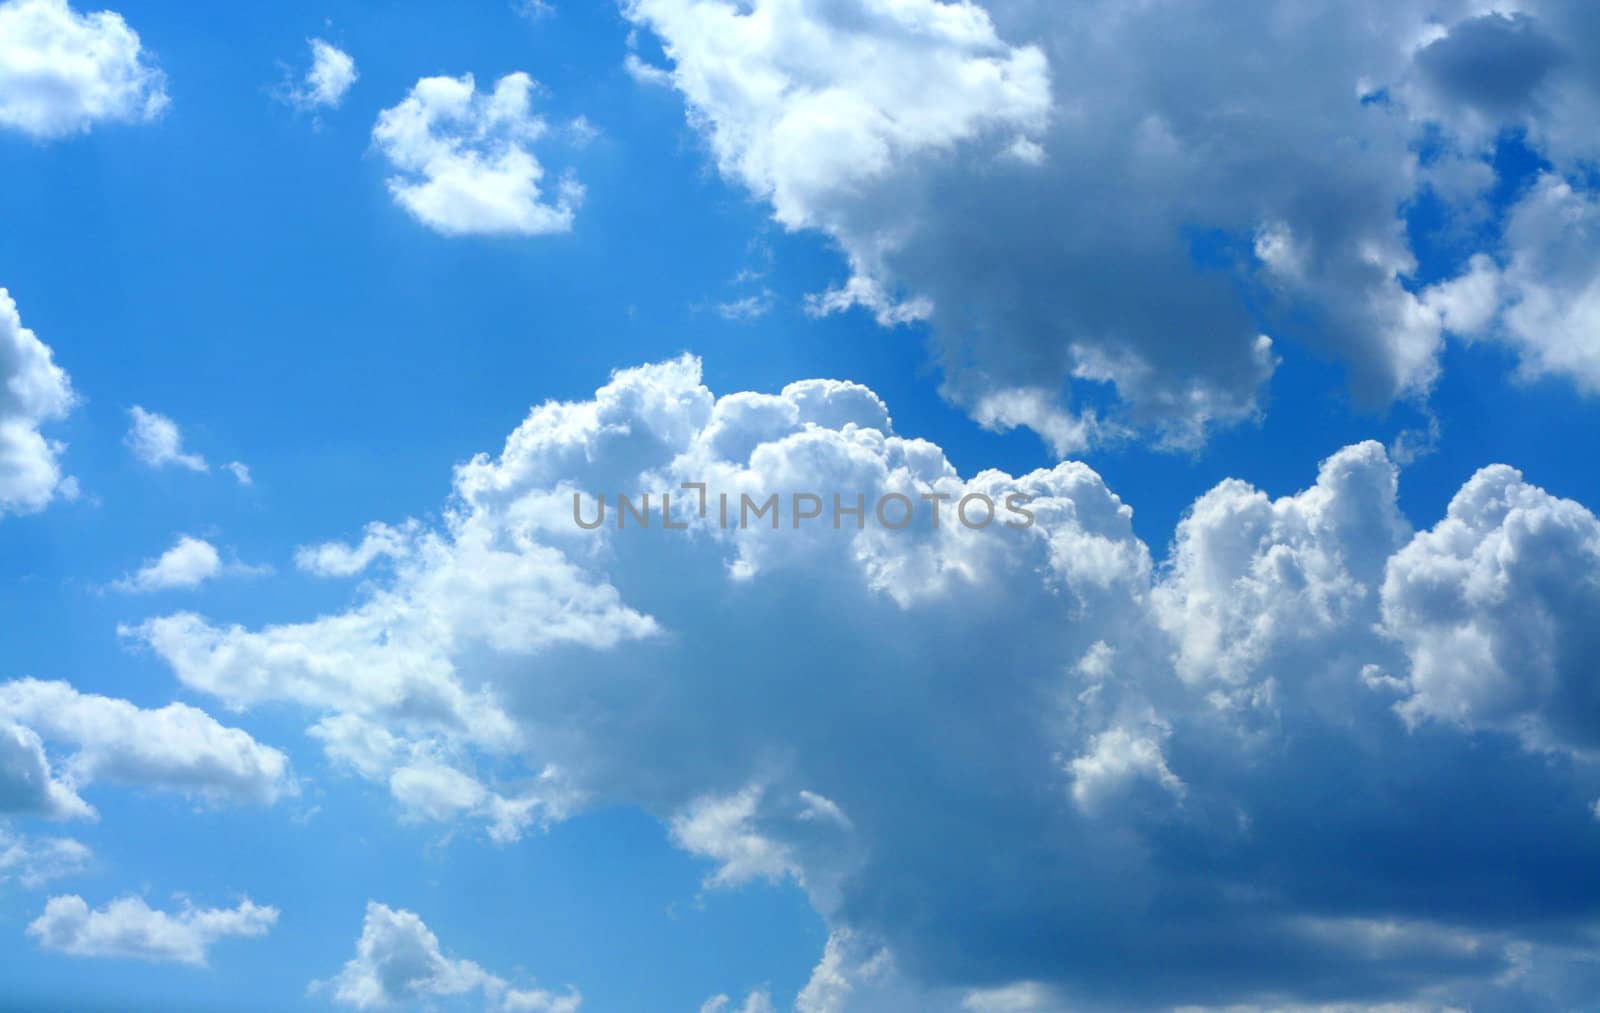 Bright blue skies and fluffy white clouds by jarenwicklund